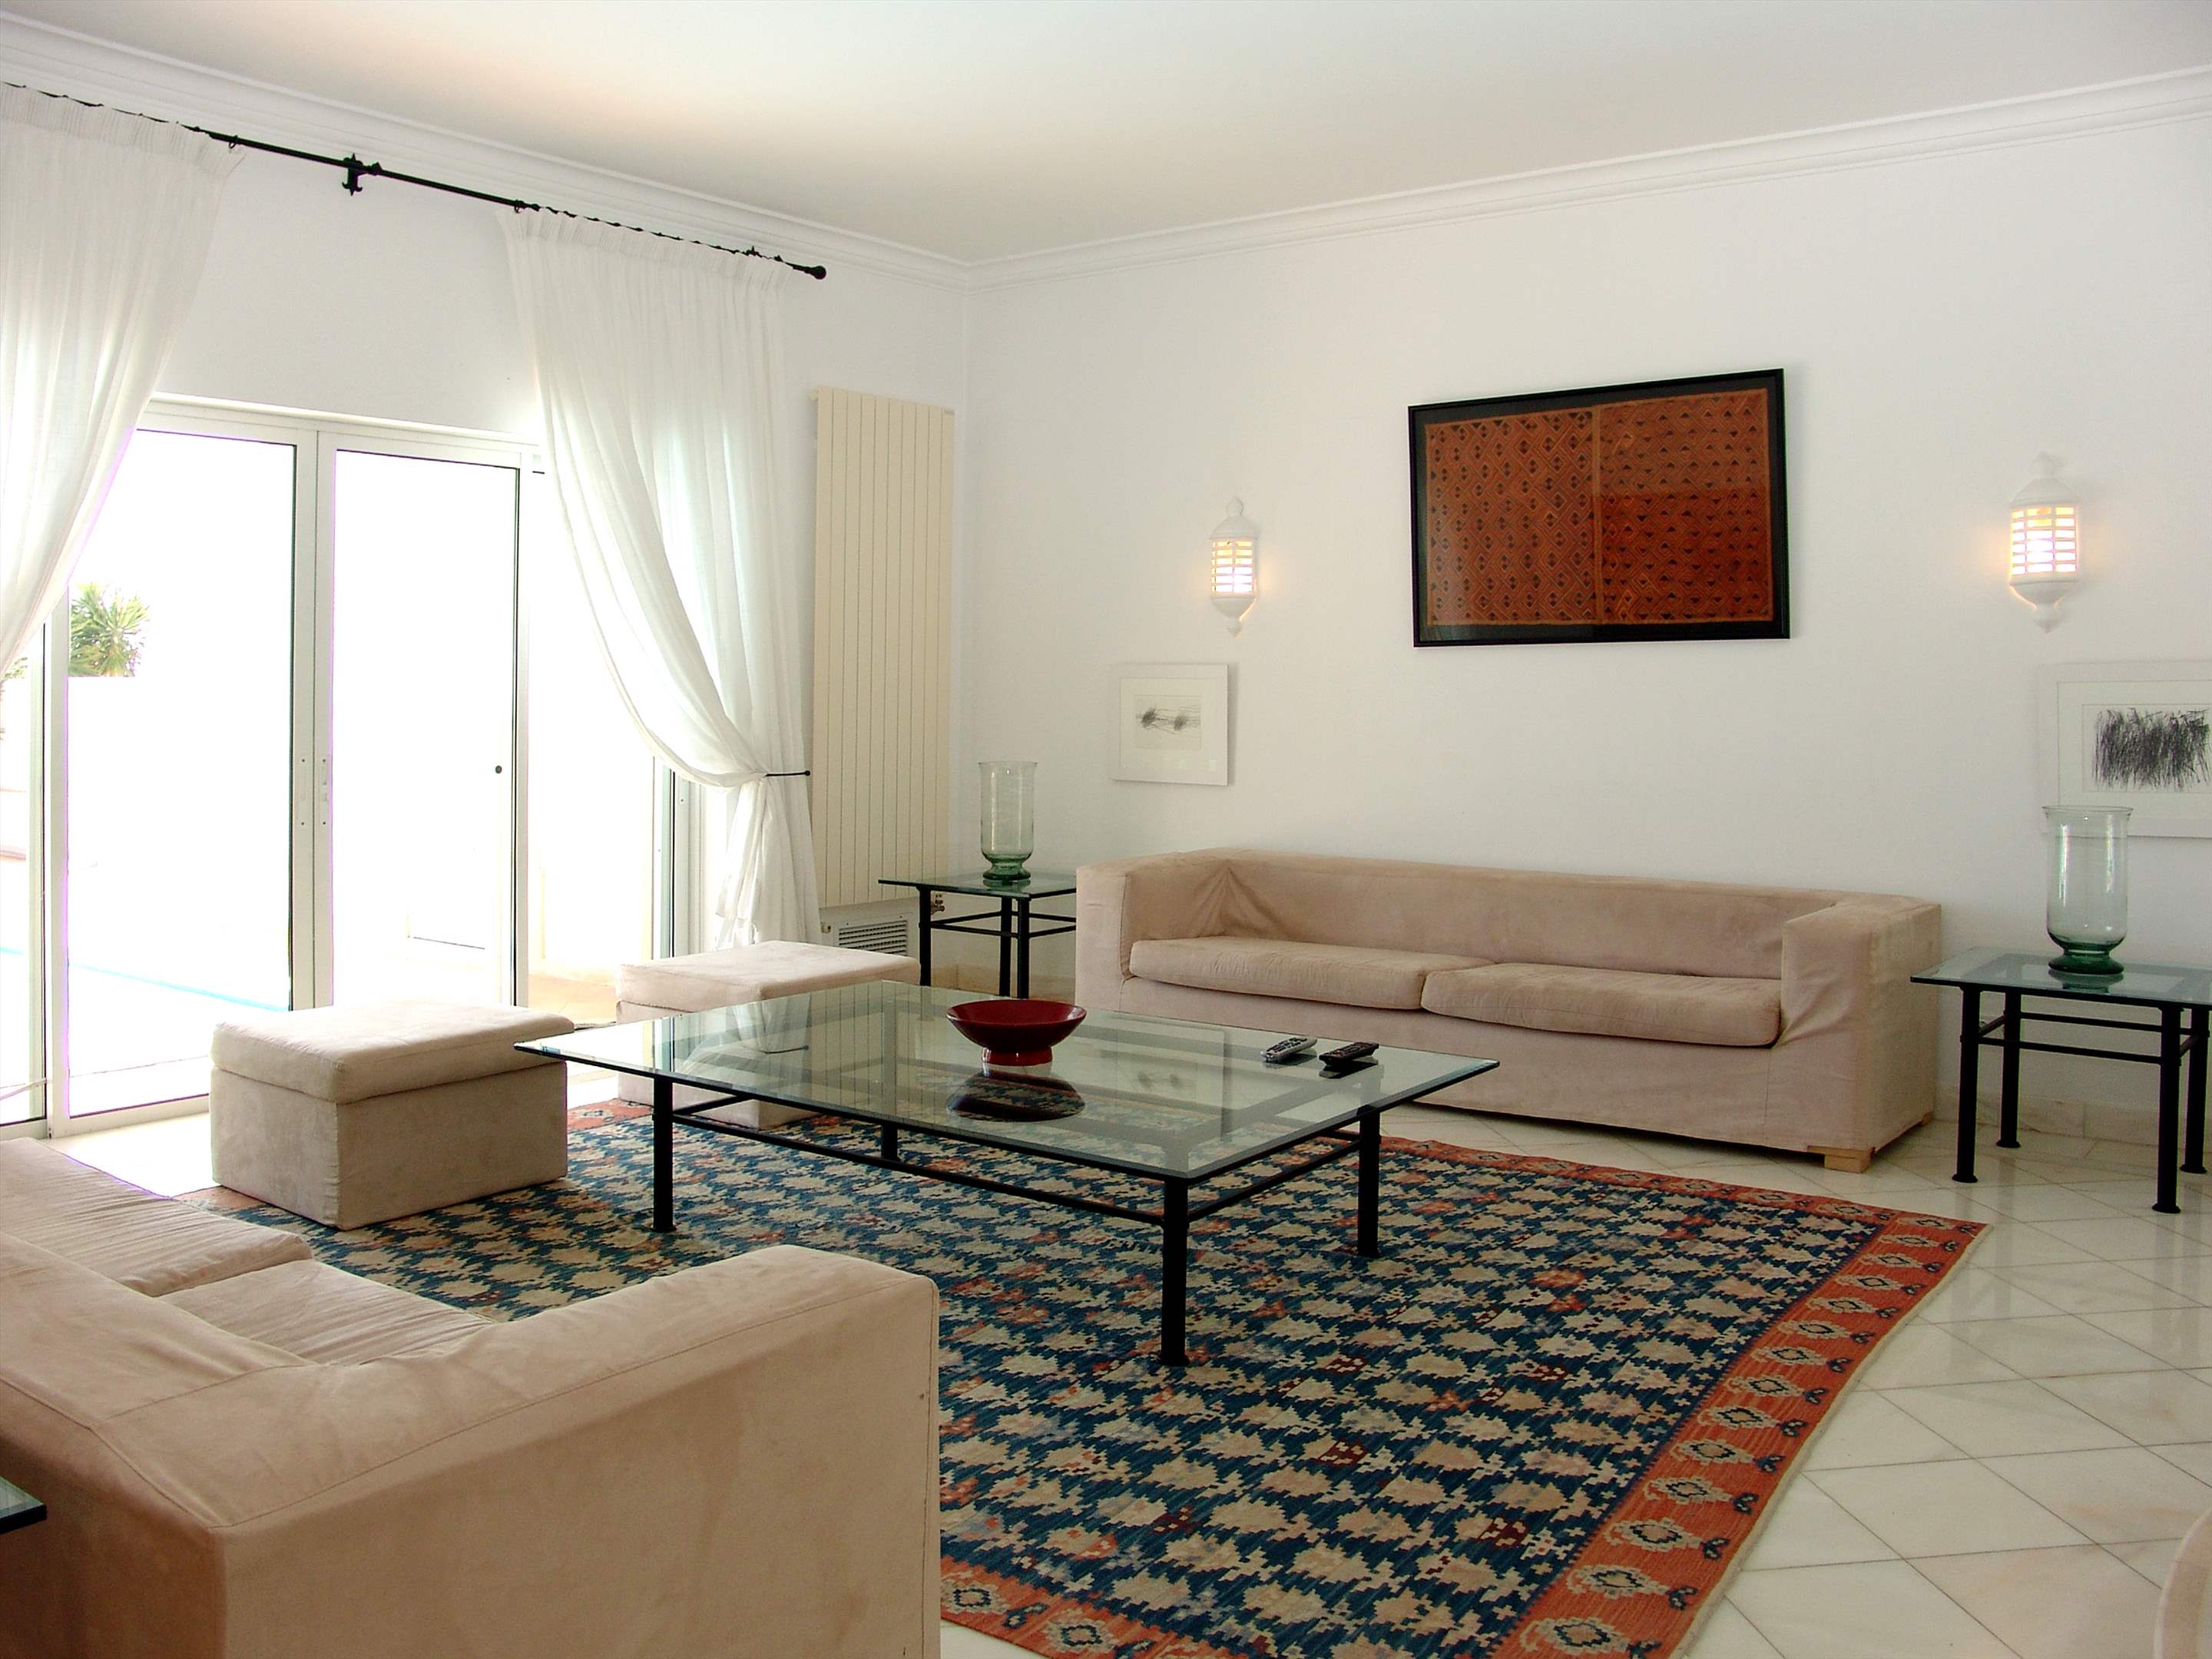 Villas Louisa, 4 Bedroom, 4 bedroom villa in Vale do Lobo, Algarve Photo #5